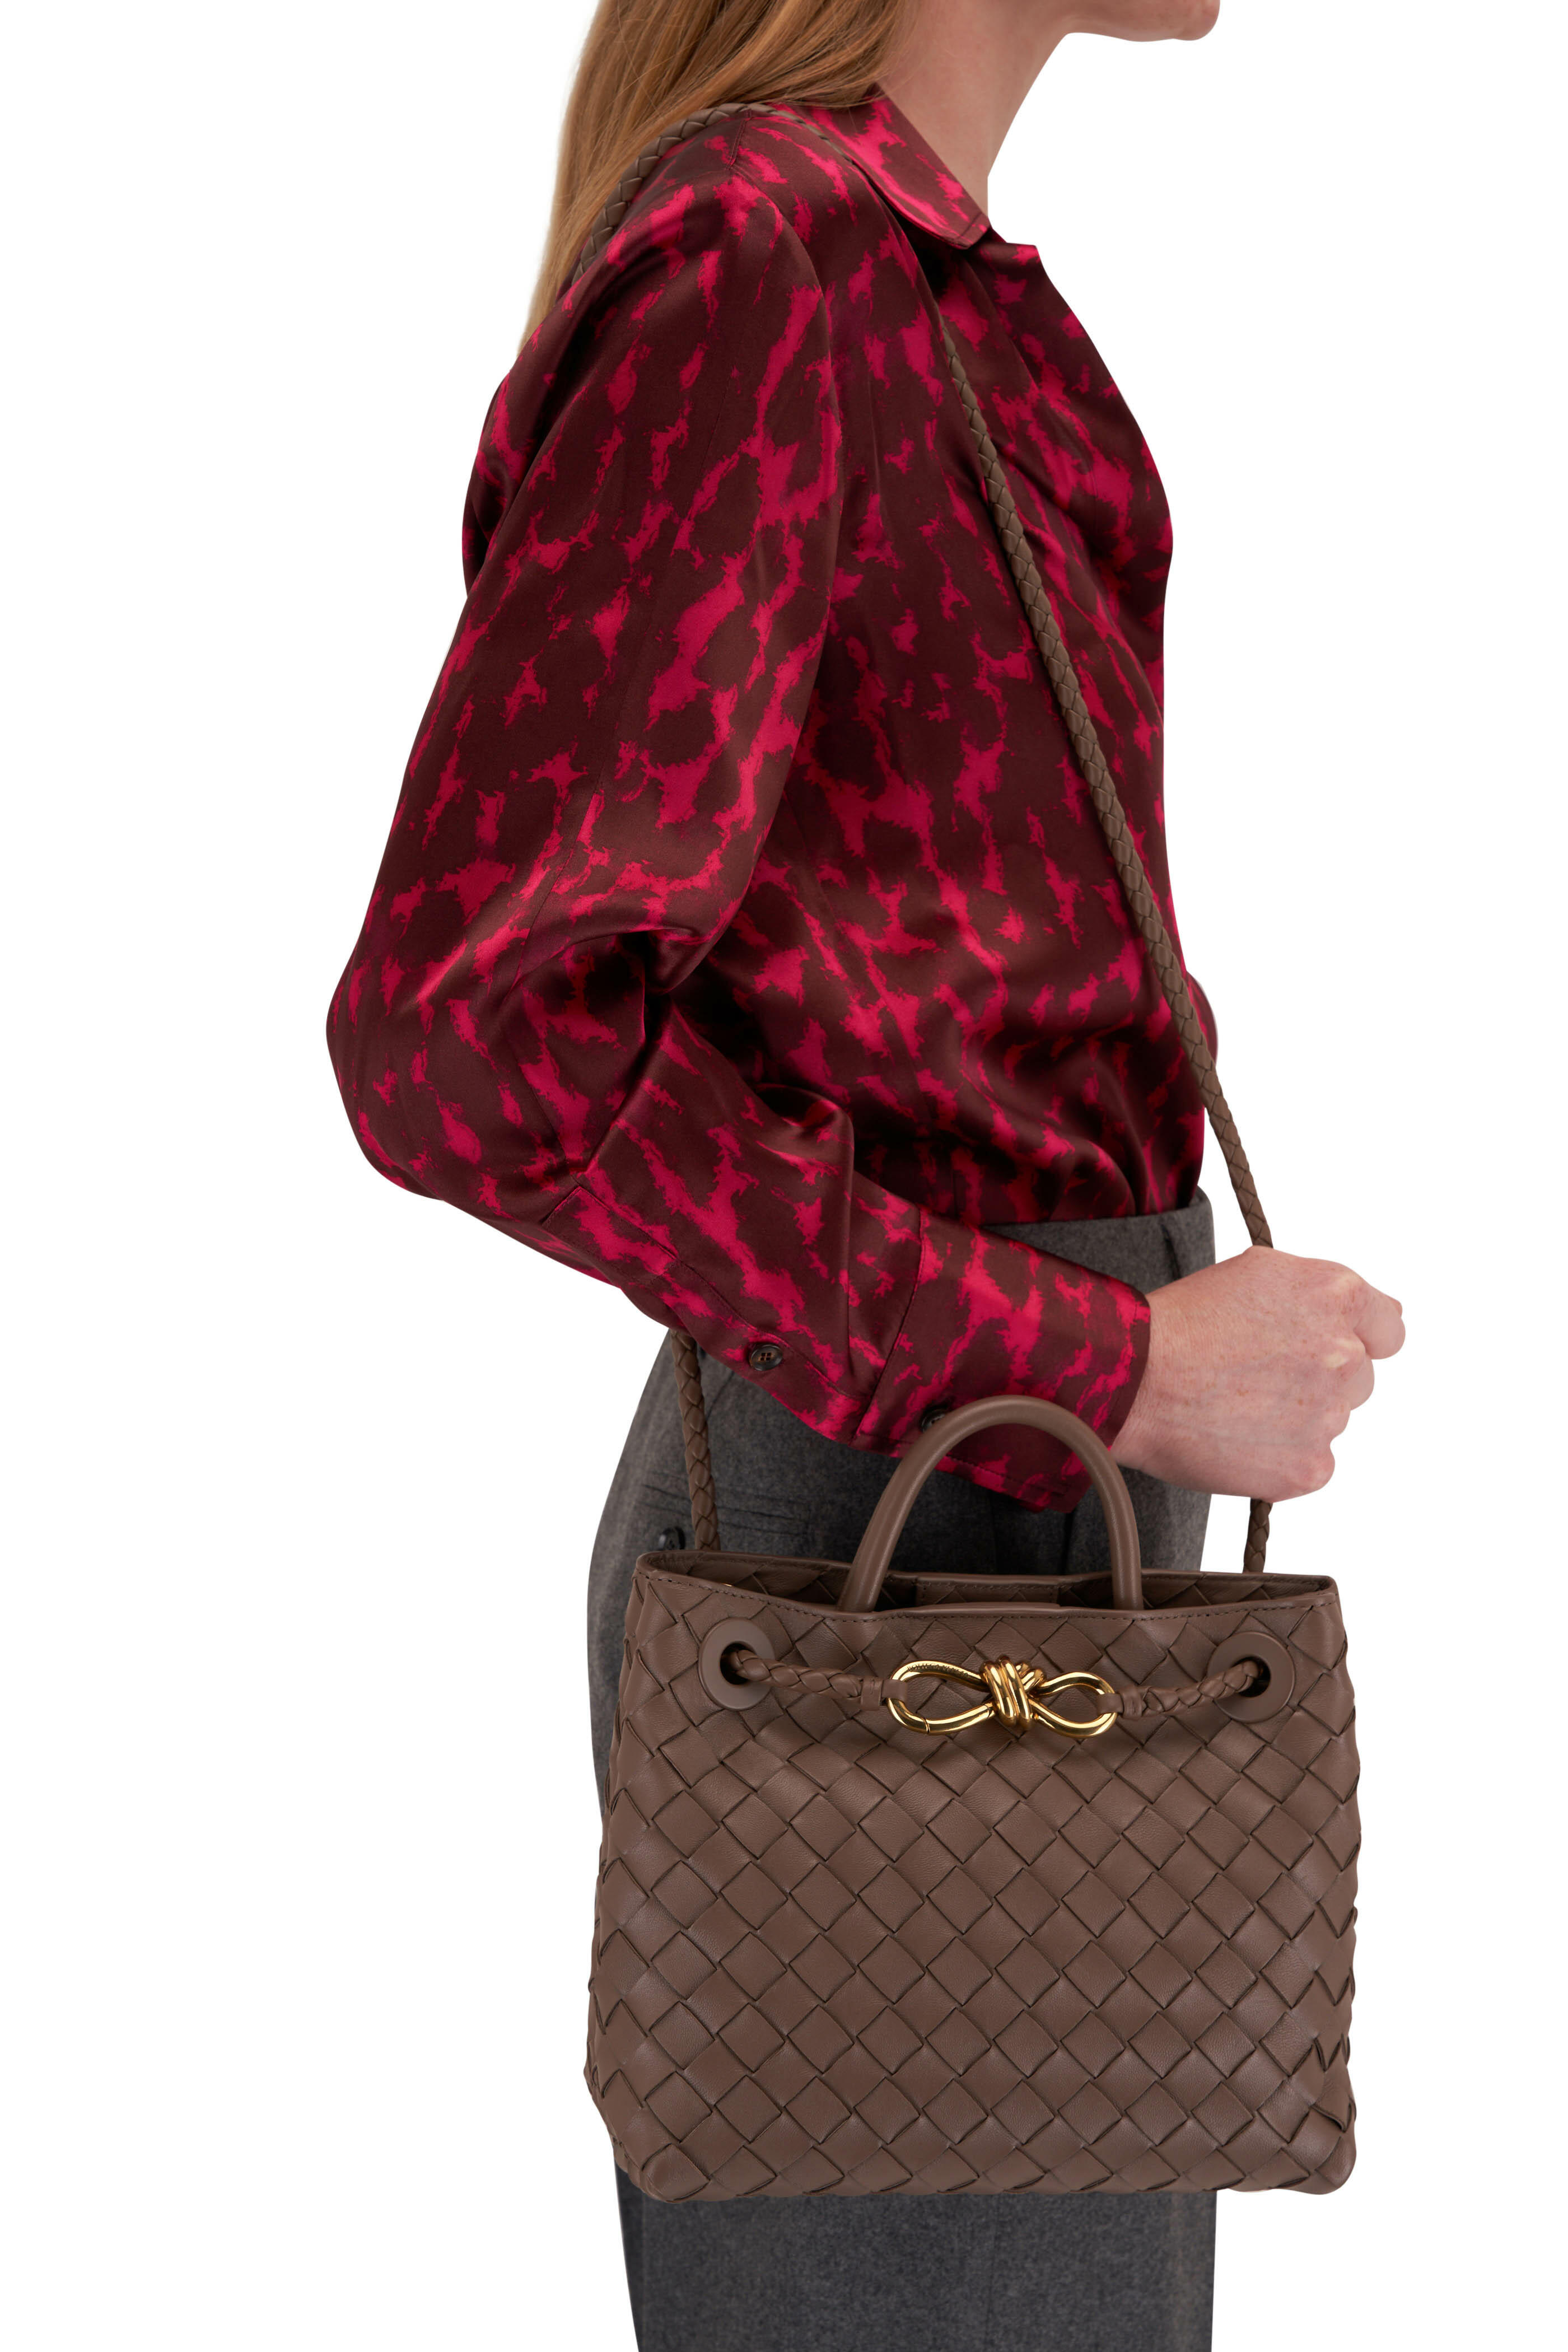 Bottega Veneta Women's Andiamo Medium Leather Crossbody Bag